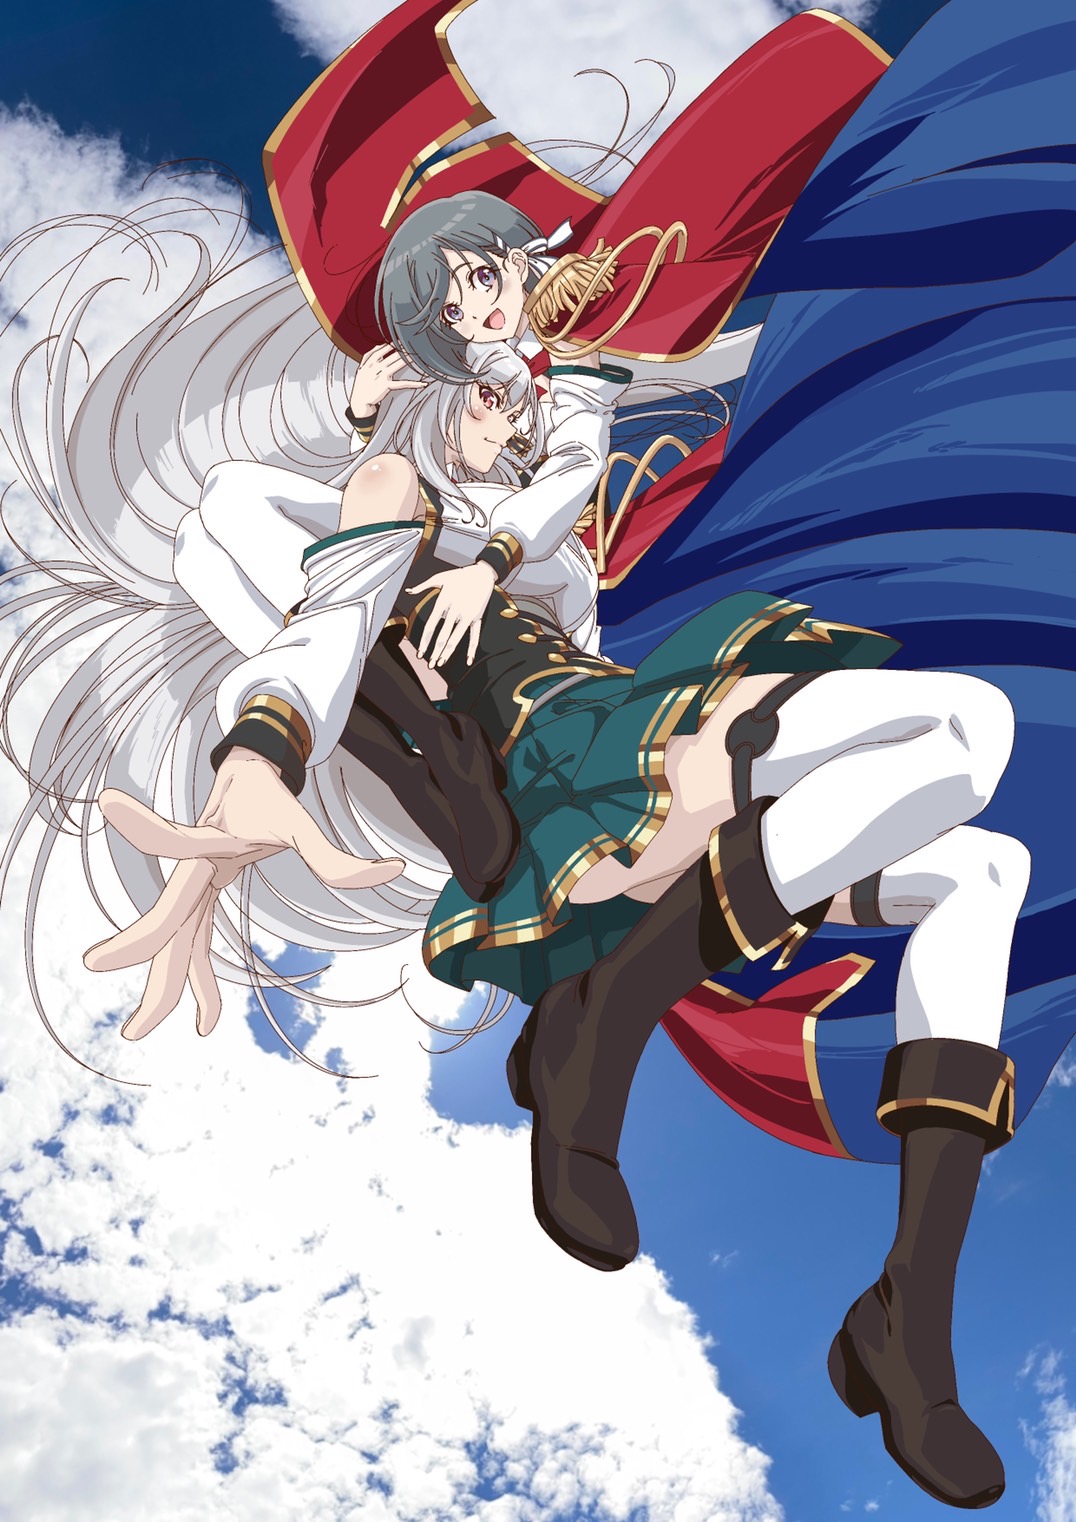 Eiyuu-oh Bu wo Kiwameru tame Tensei su (Reborn to Master the Blade: From  Hero-King to Extraordinary Squire) - Zerochan Anime Image Board